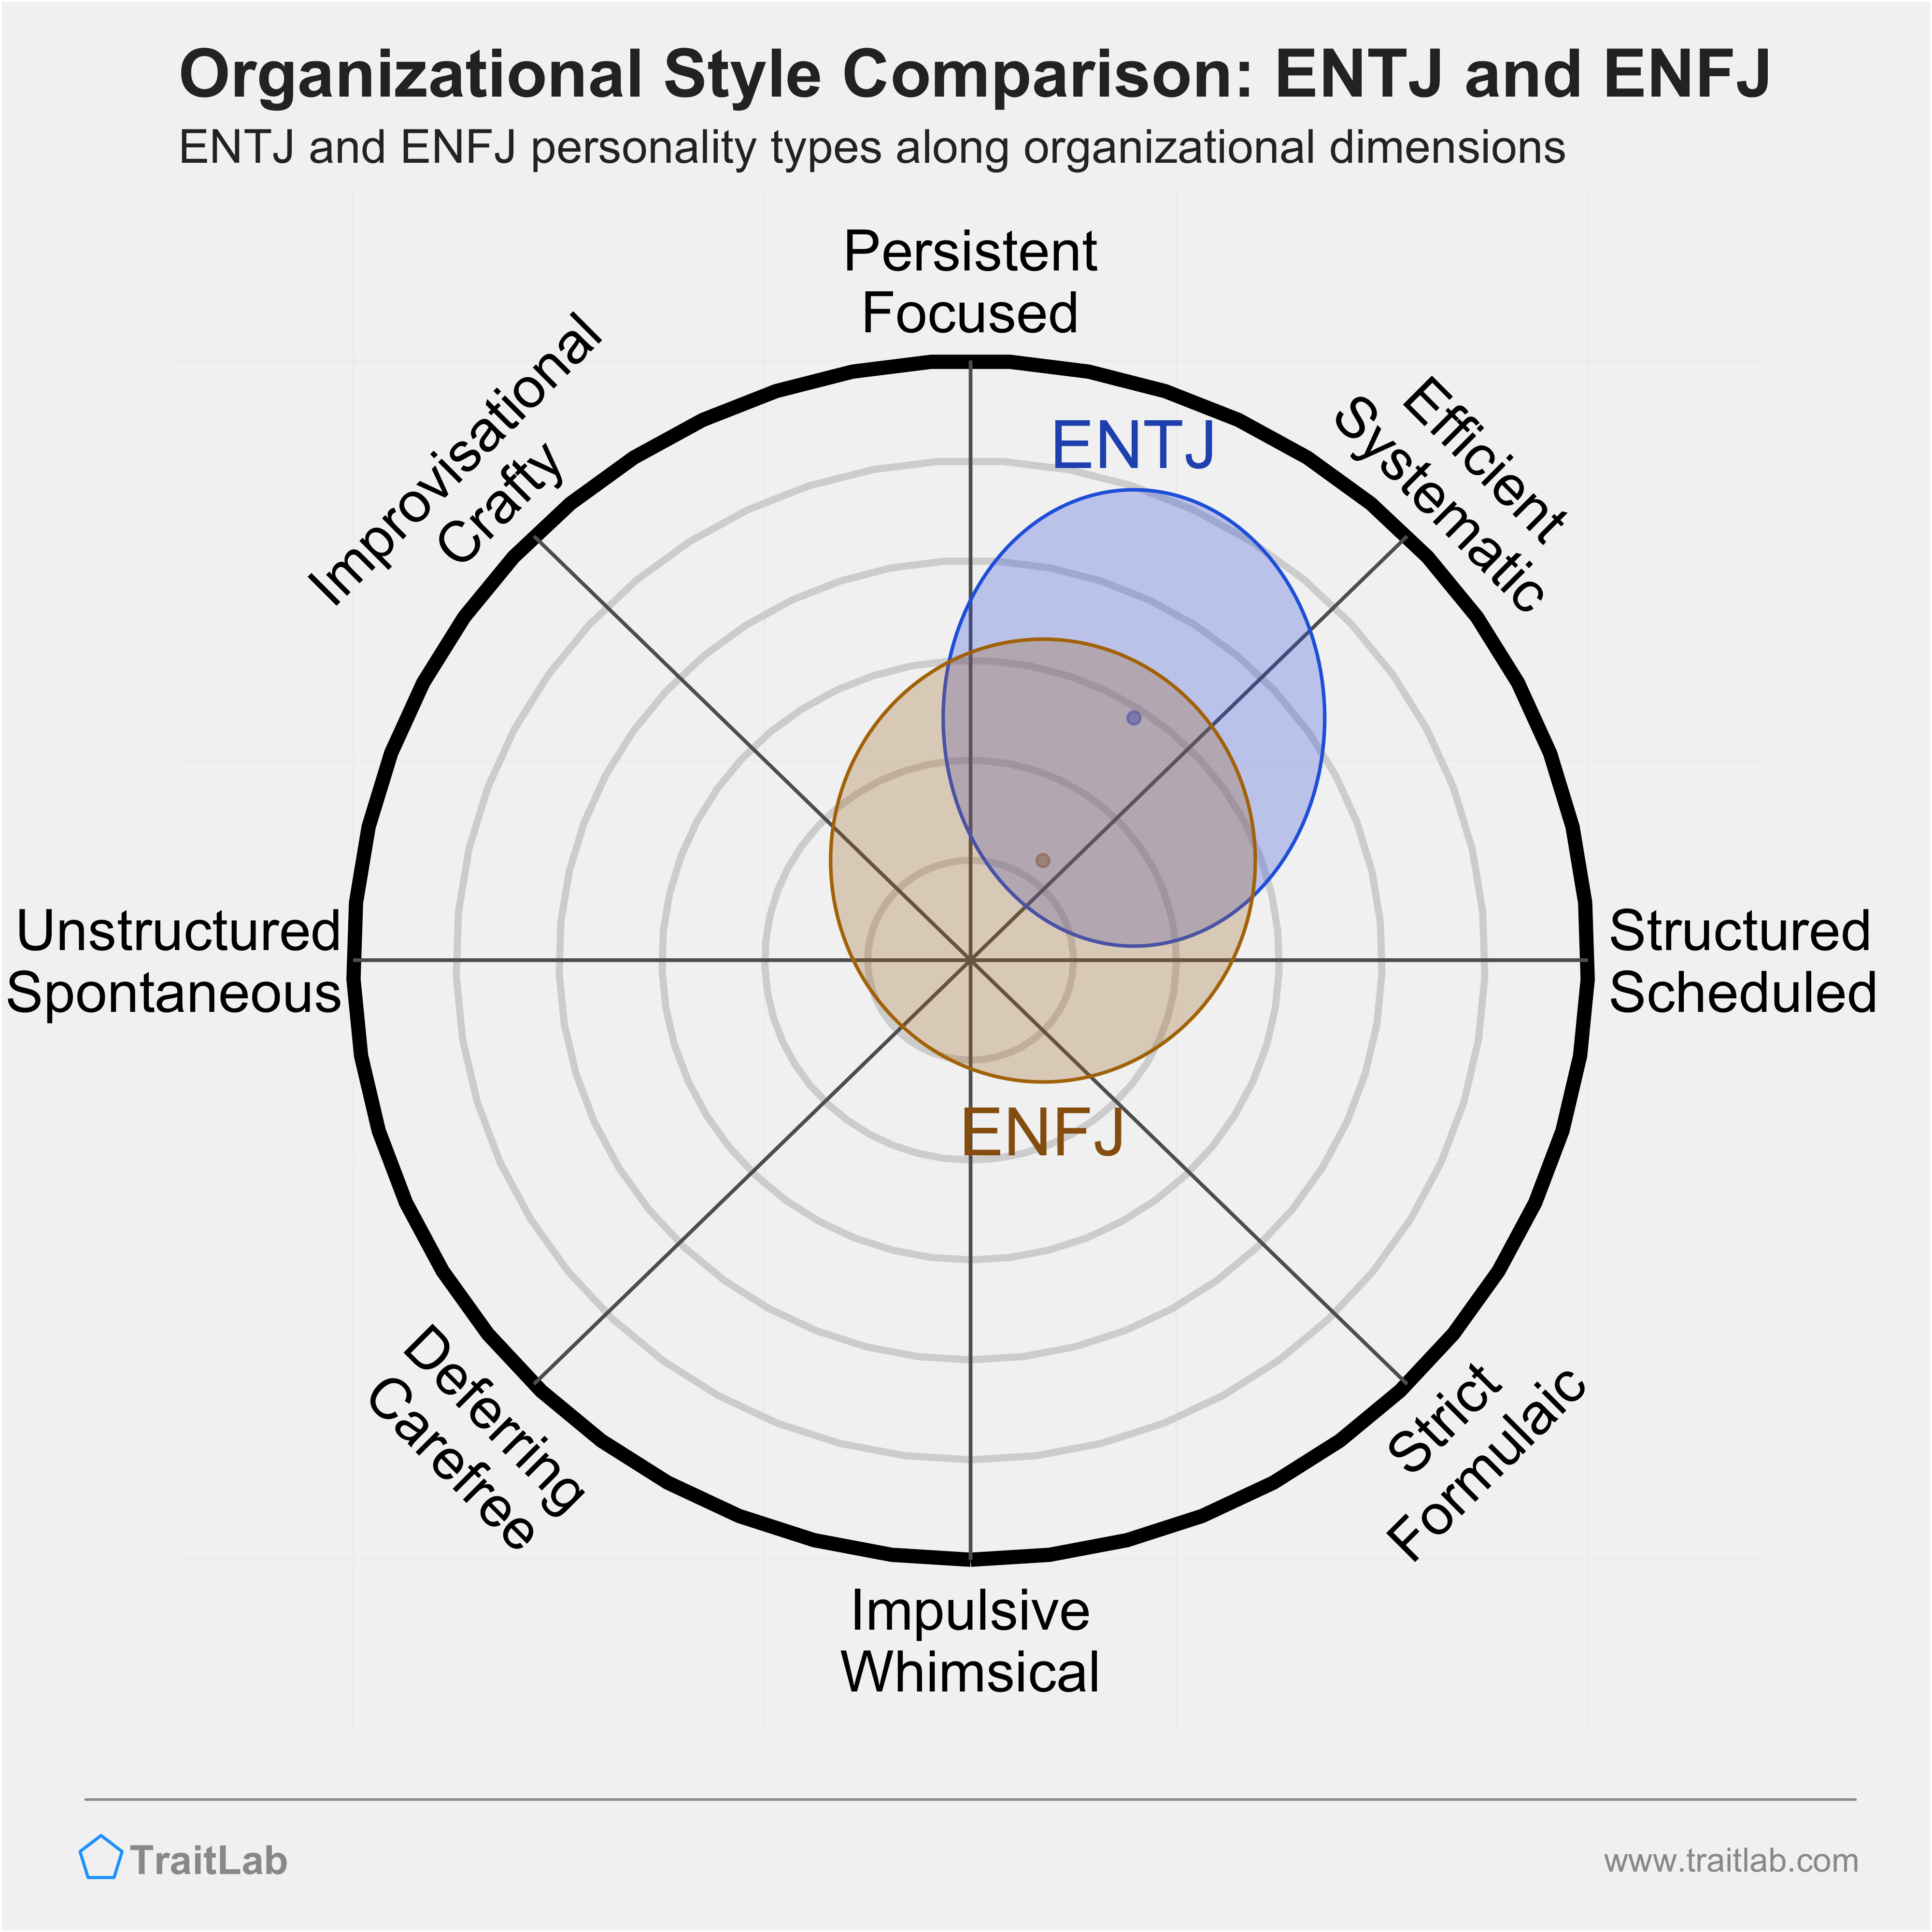 ENTJ and ENFJ comparison across organizational dimensions